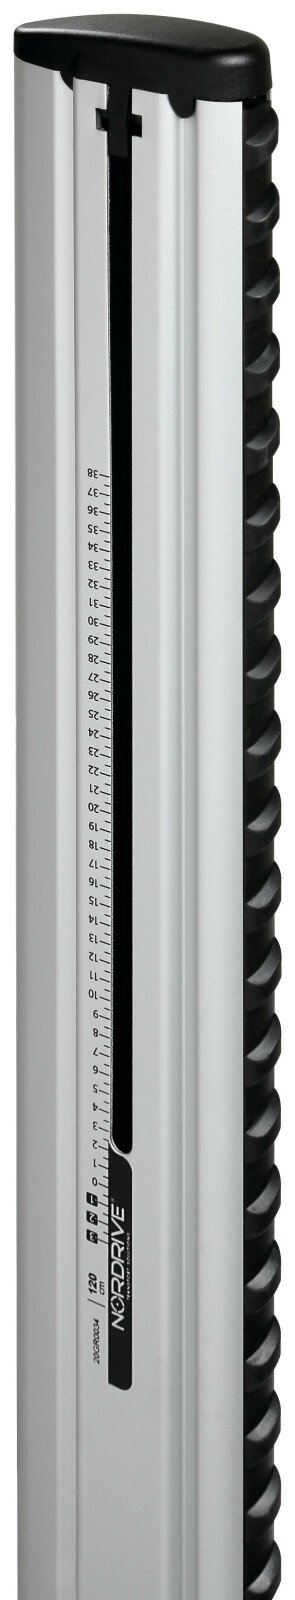 Silenzio aluminium csomagtartórúd szett, 2 db - S - 108 cm thumb